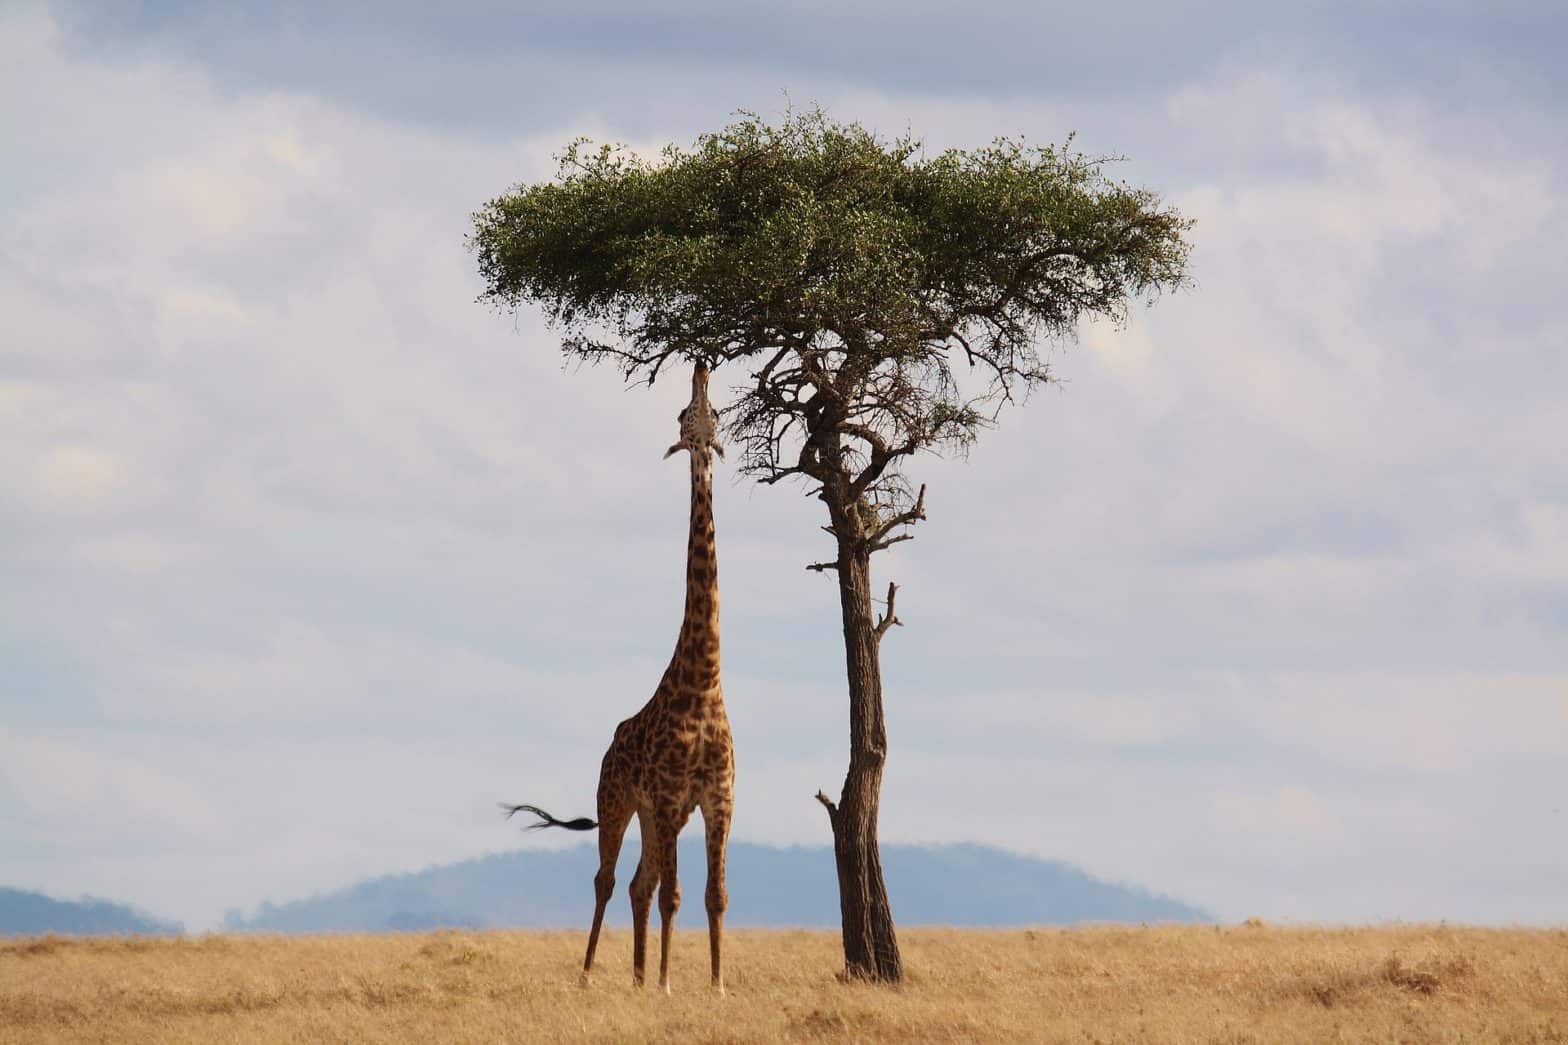 At the kenya safari is a Giraffe eating a tree leaves